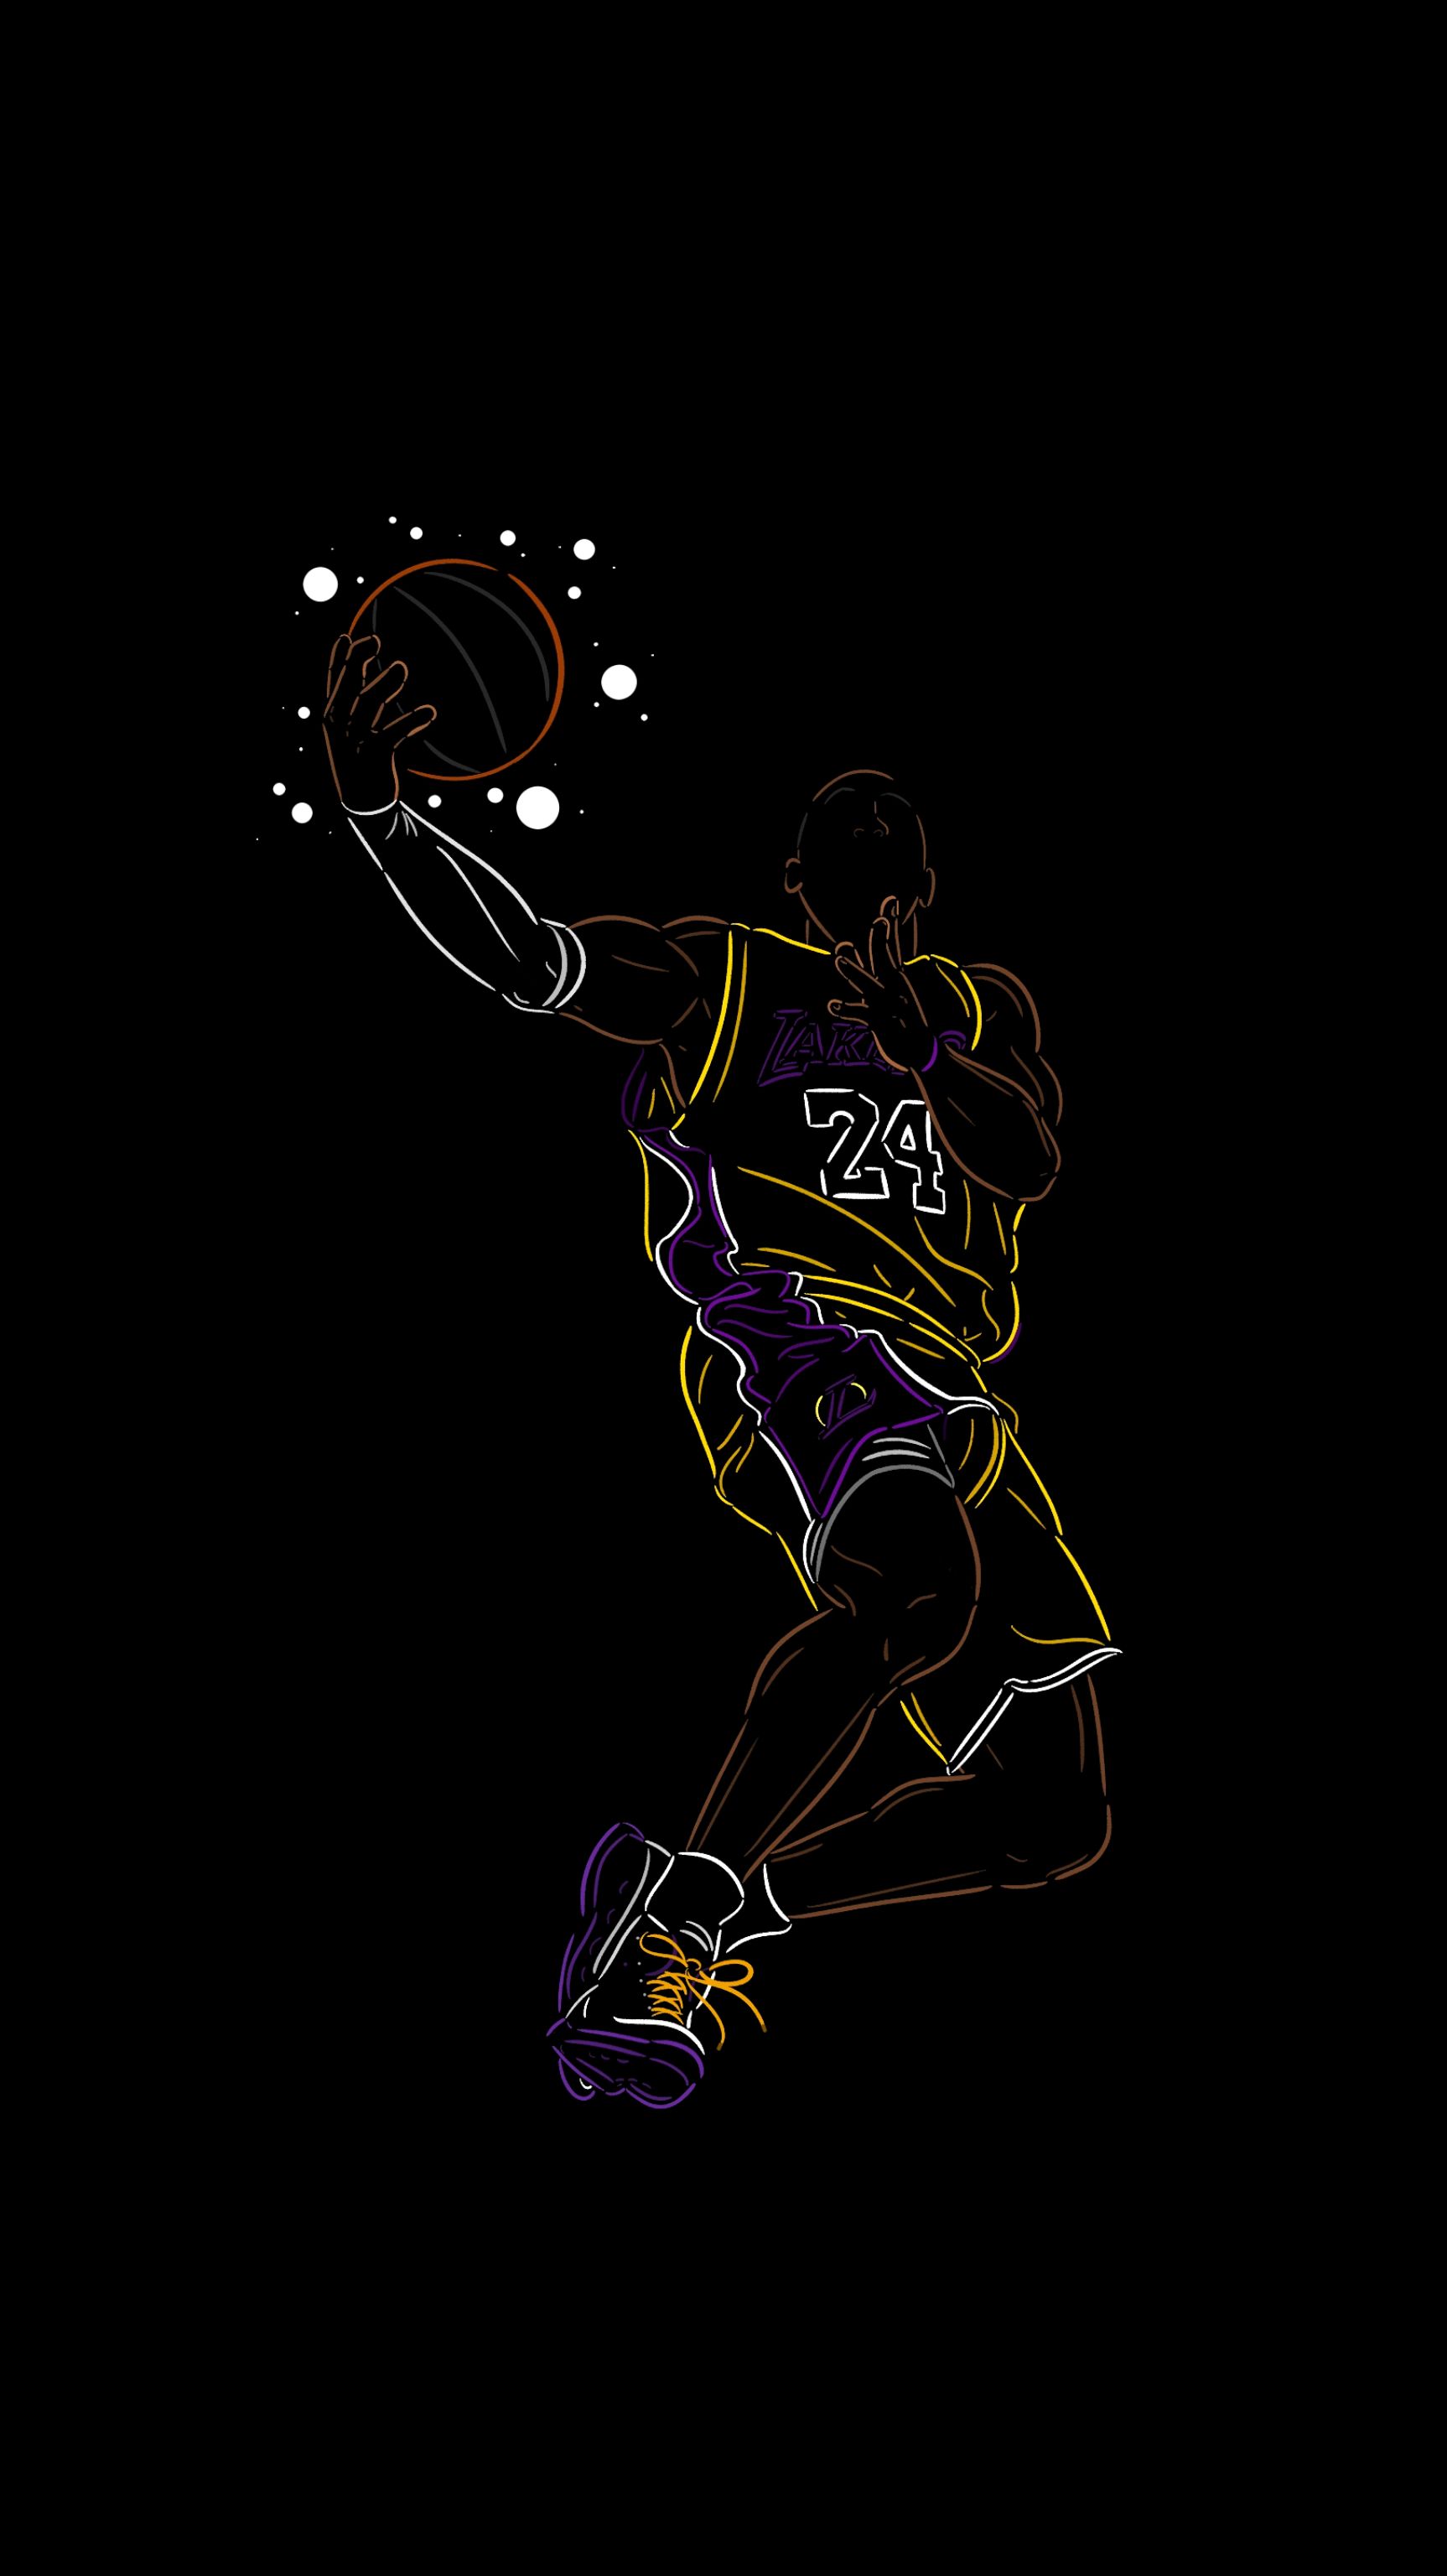  Kobe Bryant Hintergrundbild 1726x3072. Made a wallpaper dedicated to Sir Kobe Bryant. I hope its okay to post this here